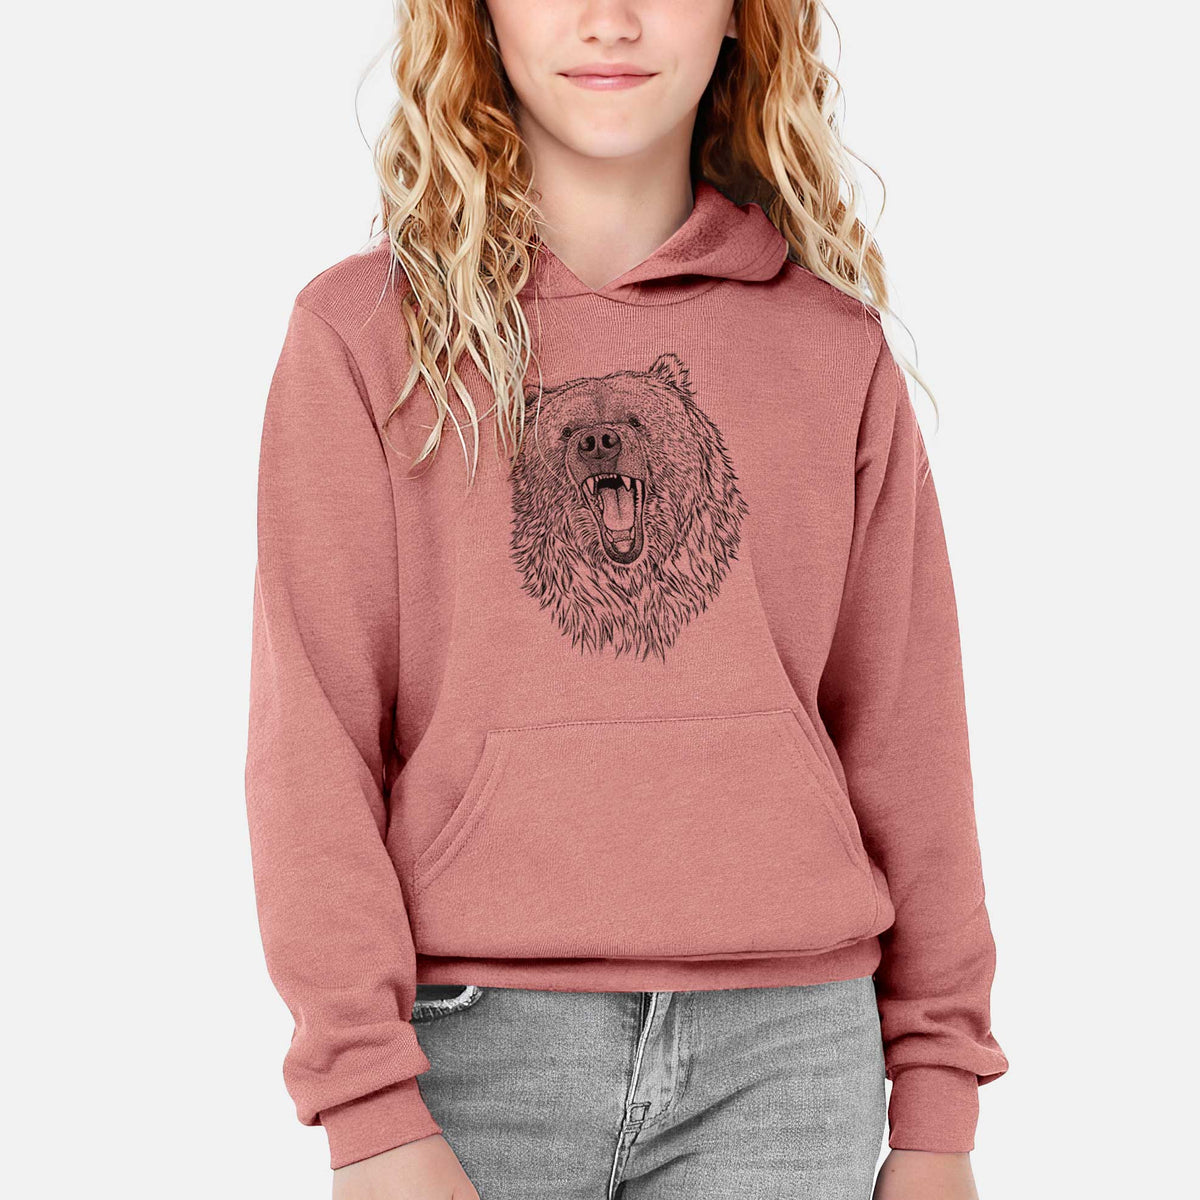 Ursus arctos - Kodiak Bear - Youth Hoodie Sweatshirt